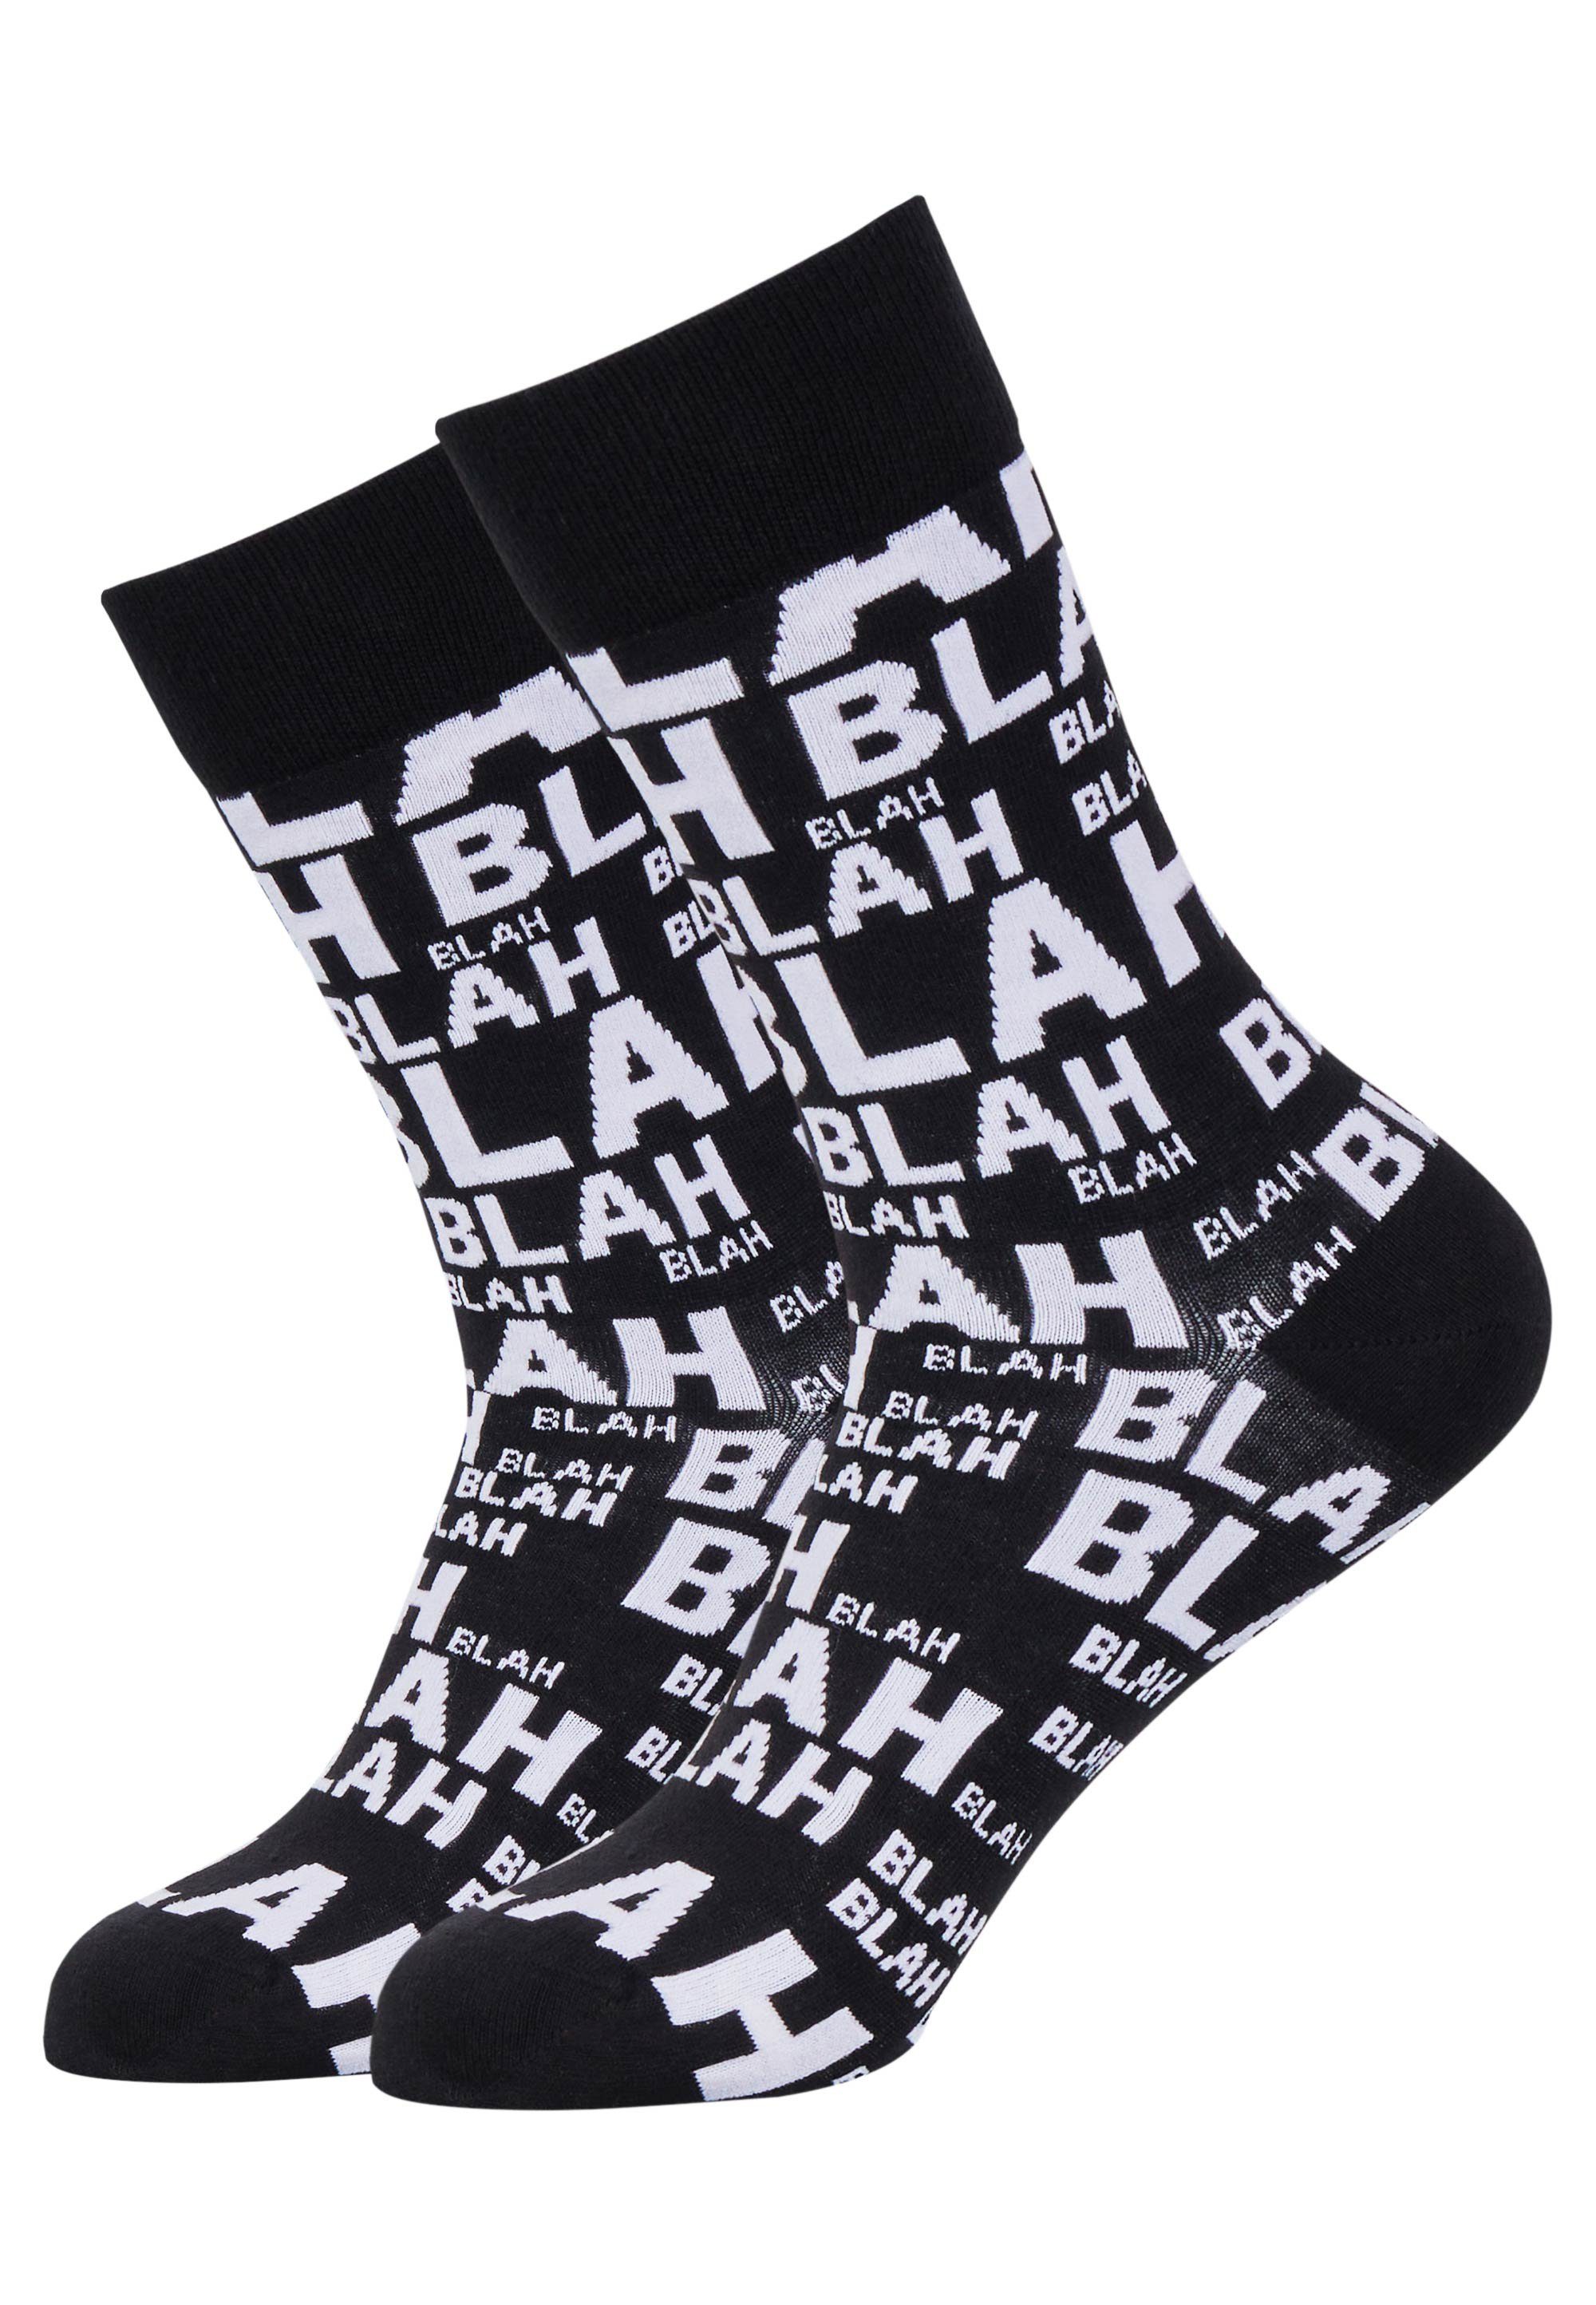 Schriftzug Mxthersocker UNHINGED dunkelgrau, Socken trendigem (3-Paar) BLAH-BLAH - mit schwarz